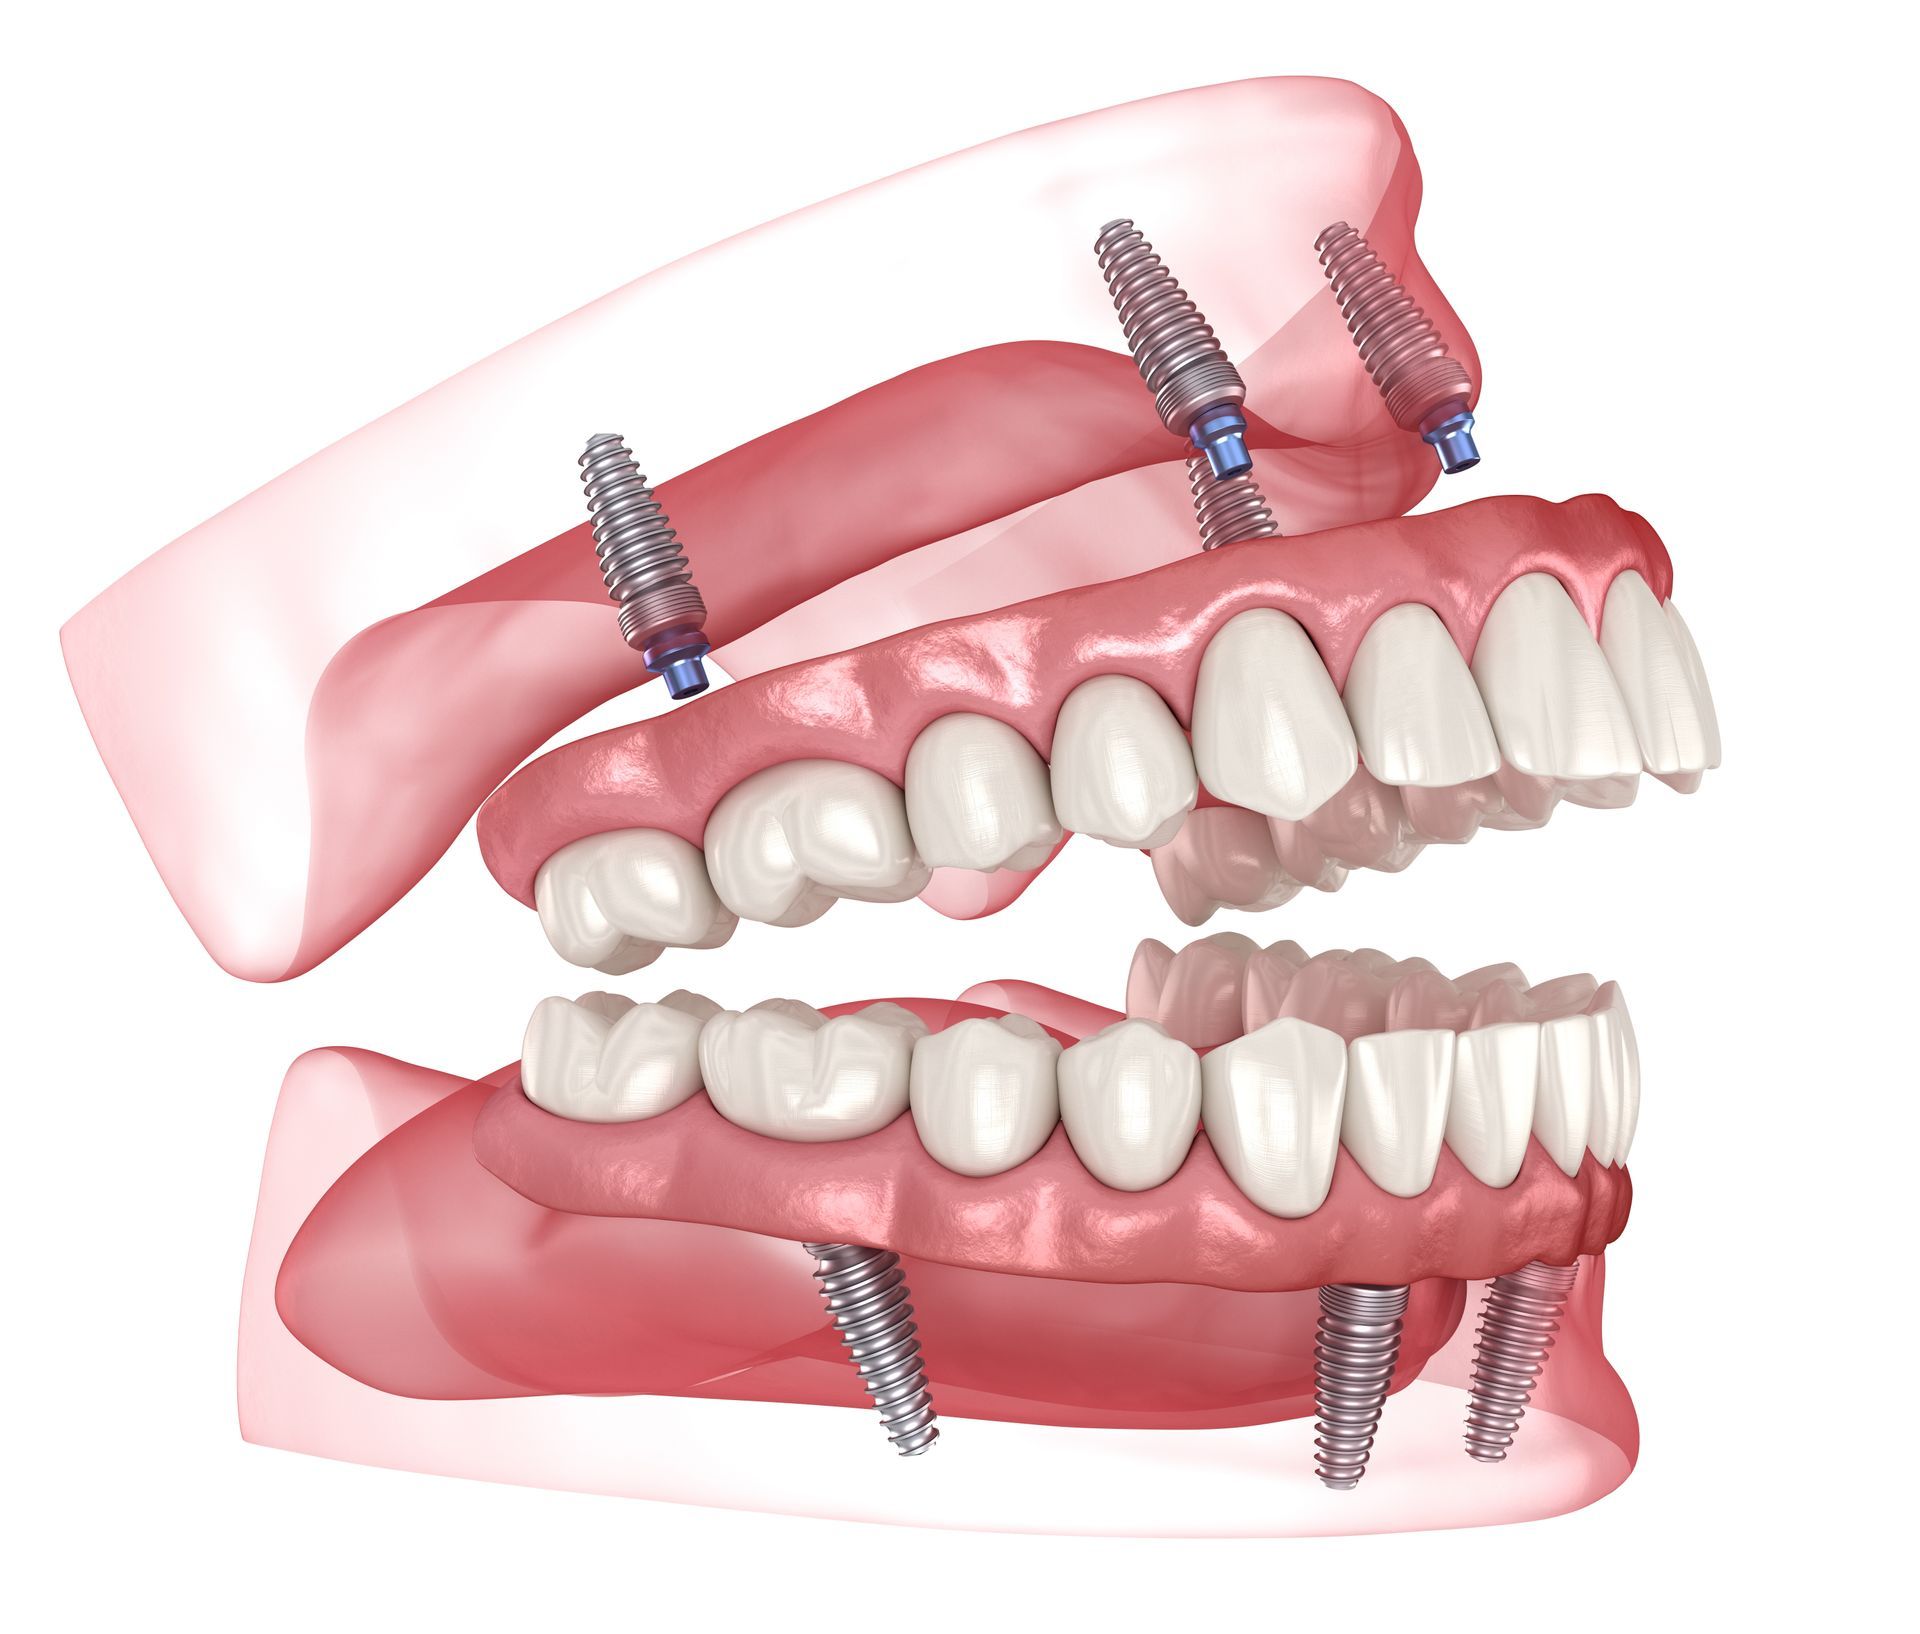 3d image of complete dentures